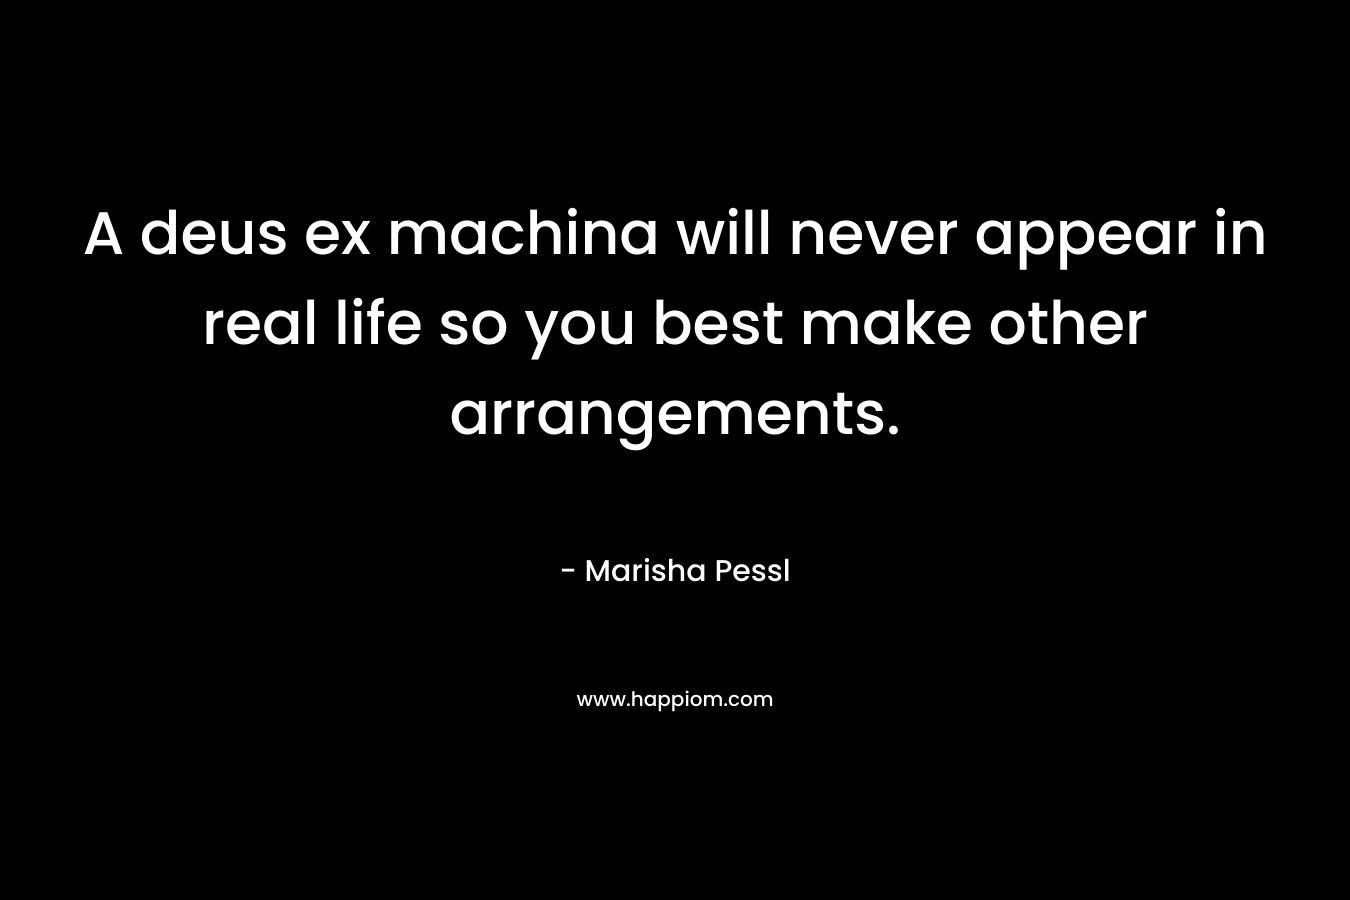 A deus ex machina will never appear in real life so you best make other arrangements. – Marisha Pessl